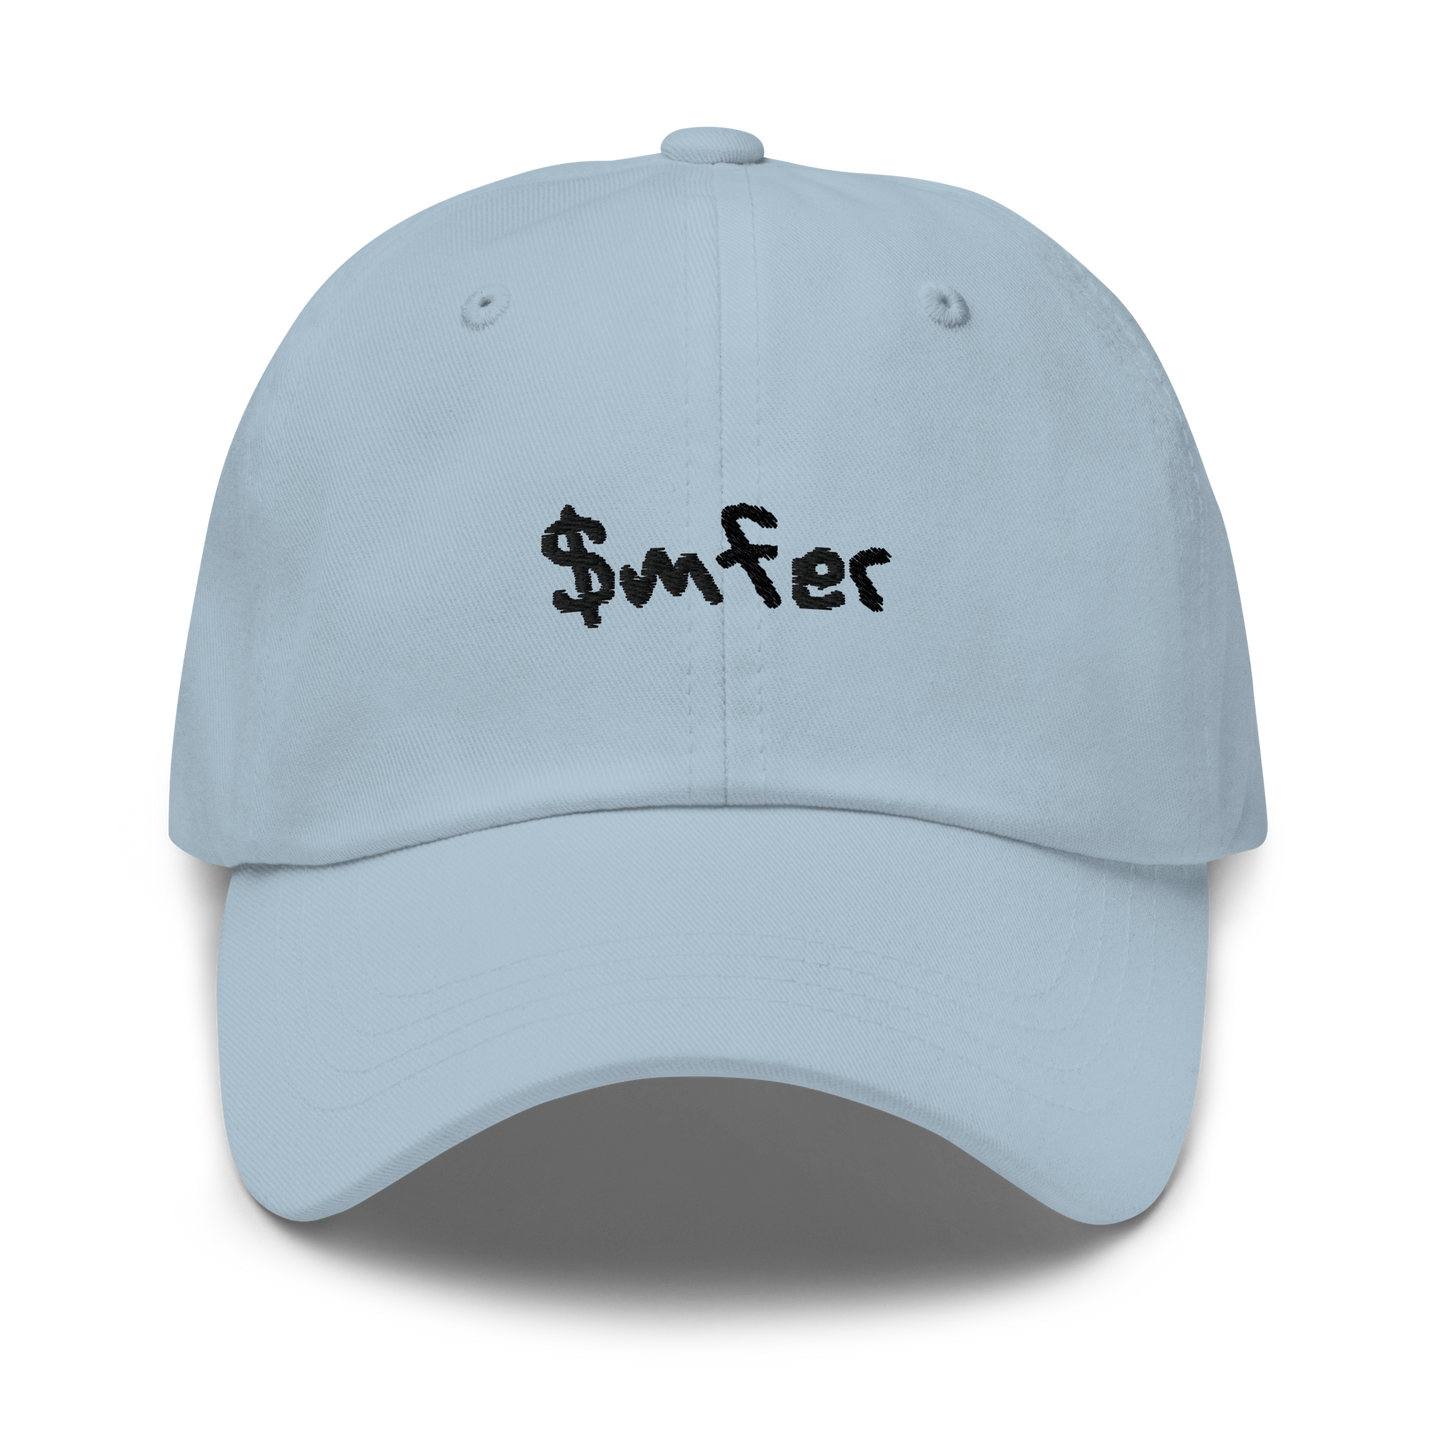 $mfer hat black text